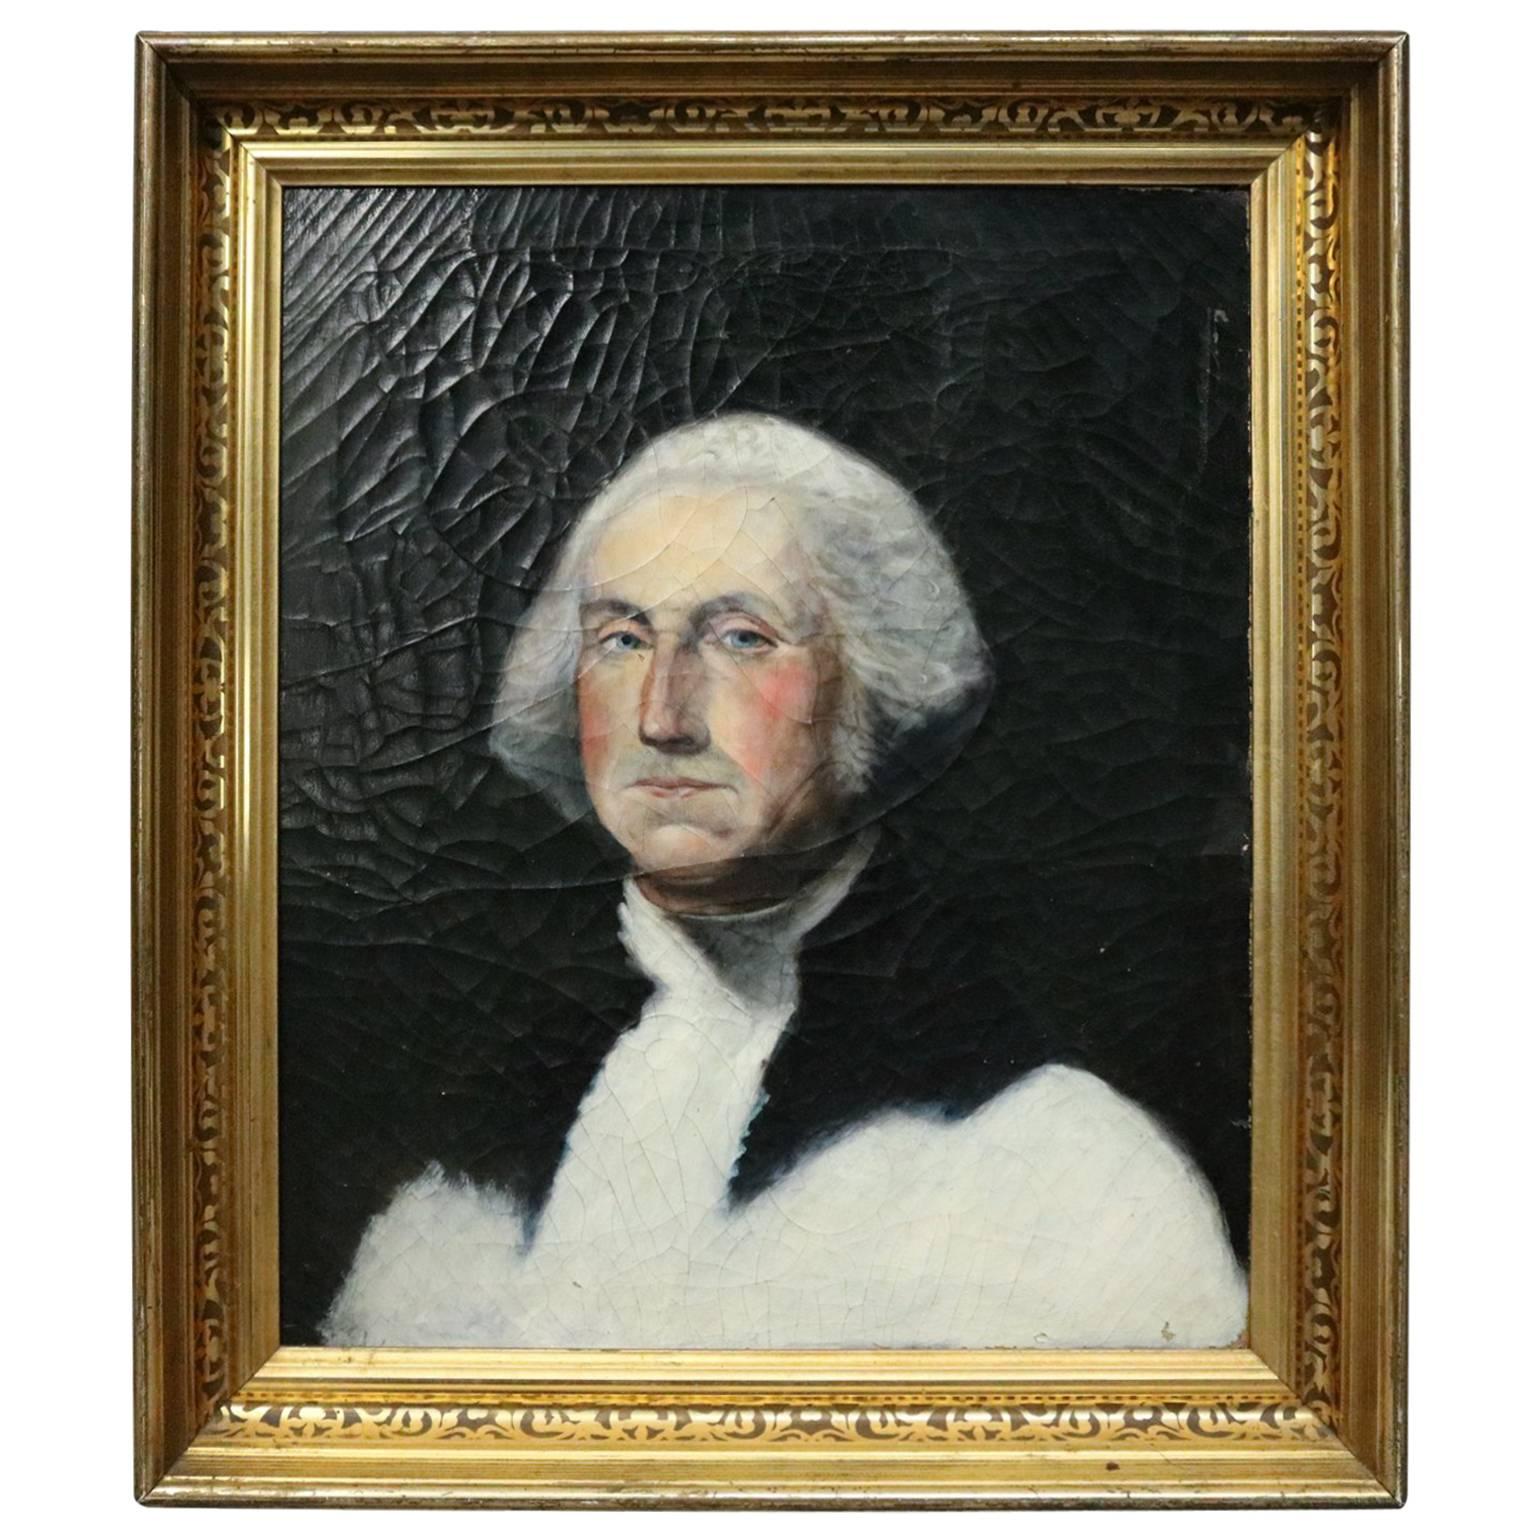 Antique Oil on Canvas Portrait Painting of President George Washington